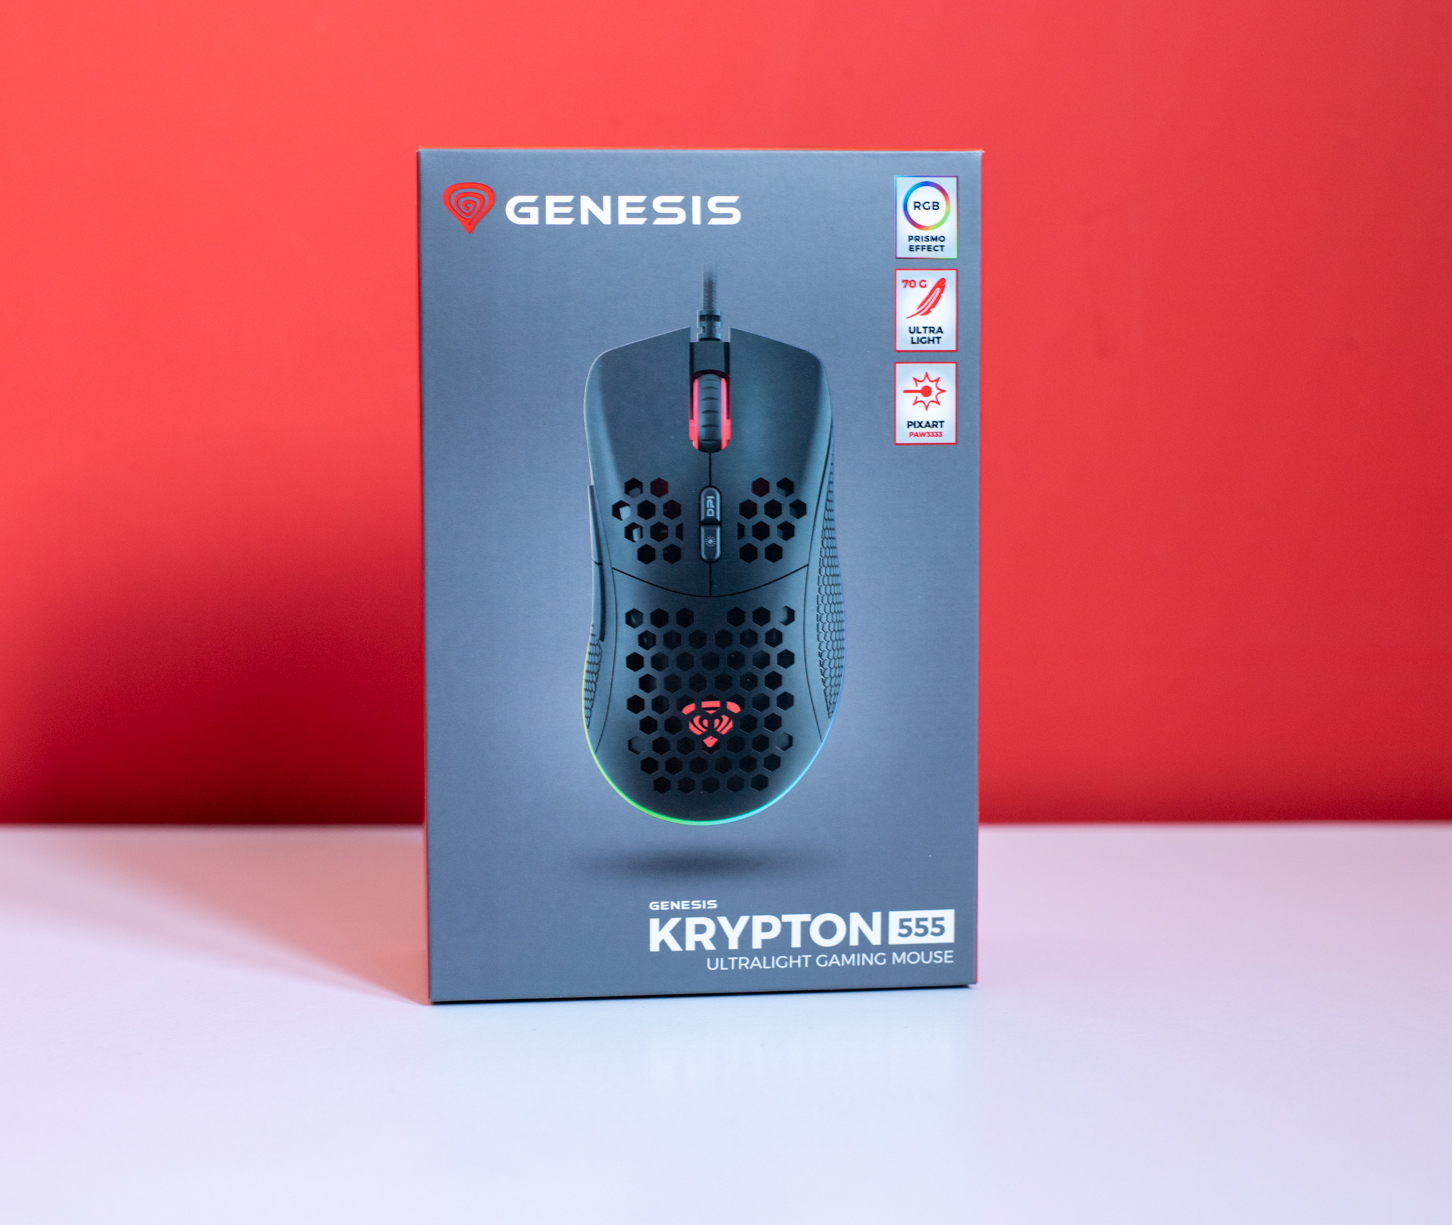 Genesis Krypton 555 - tania i lekka myszka gamingowa